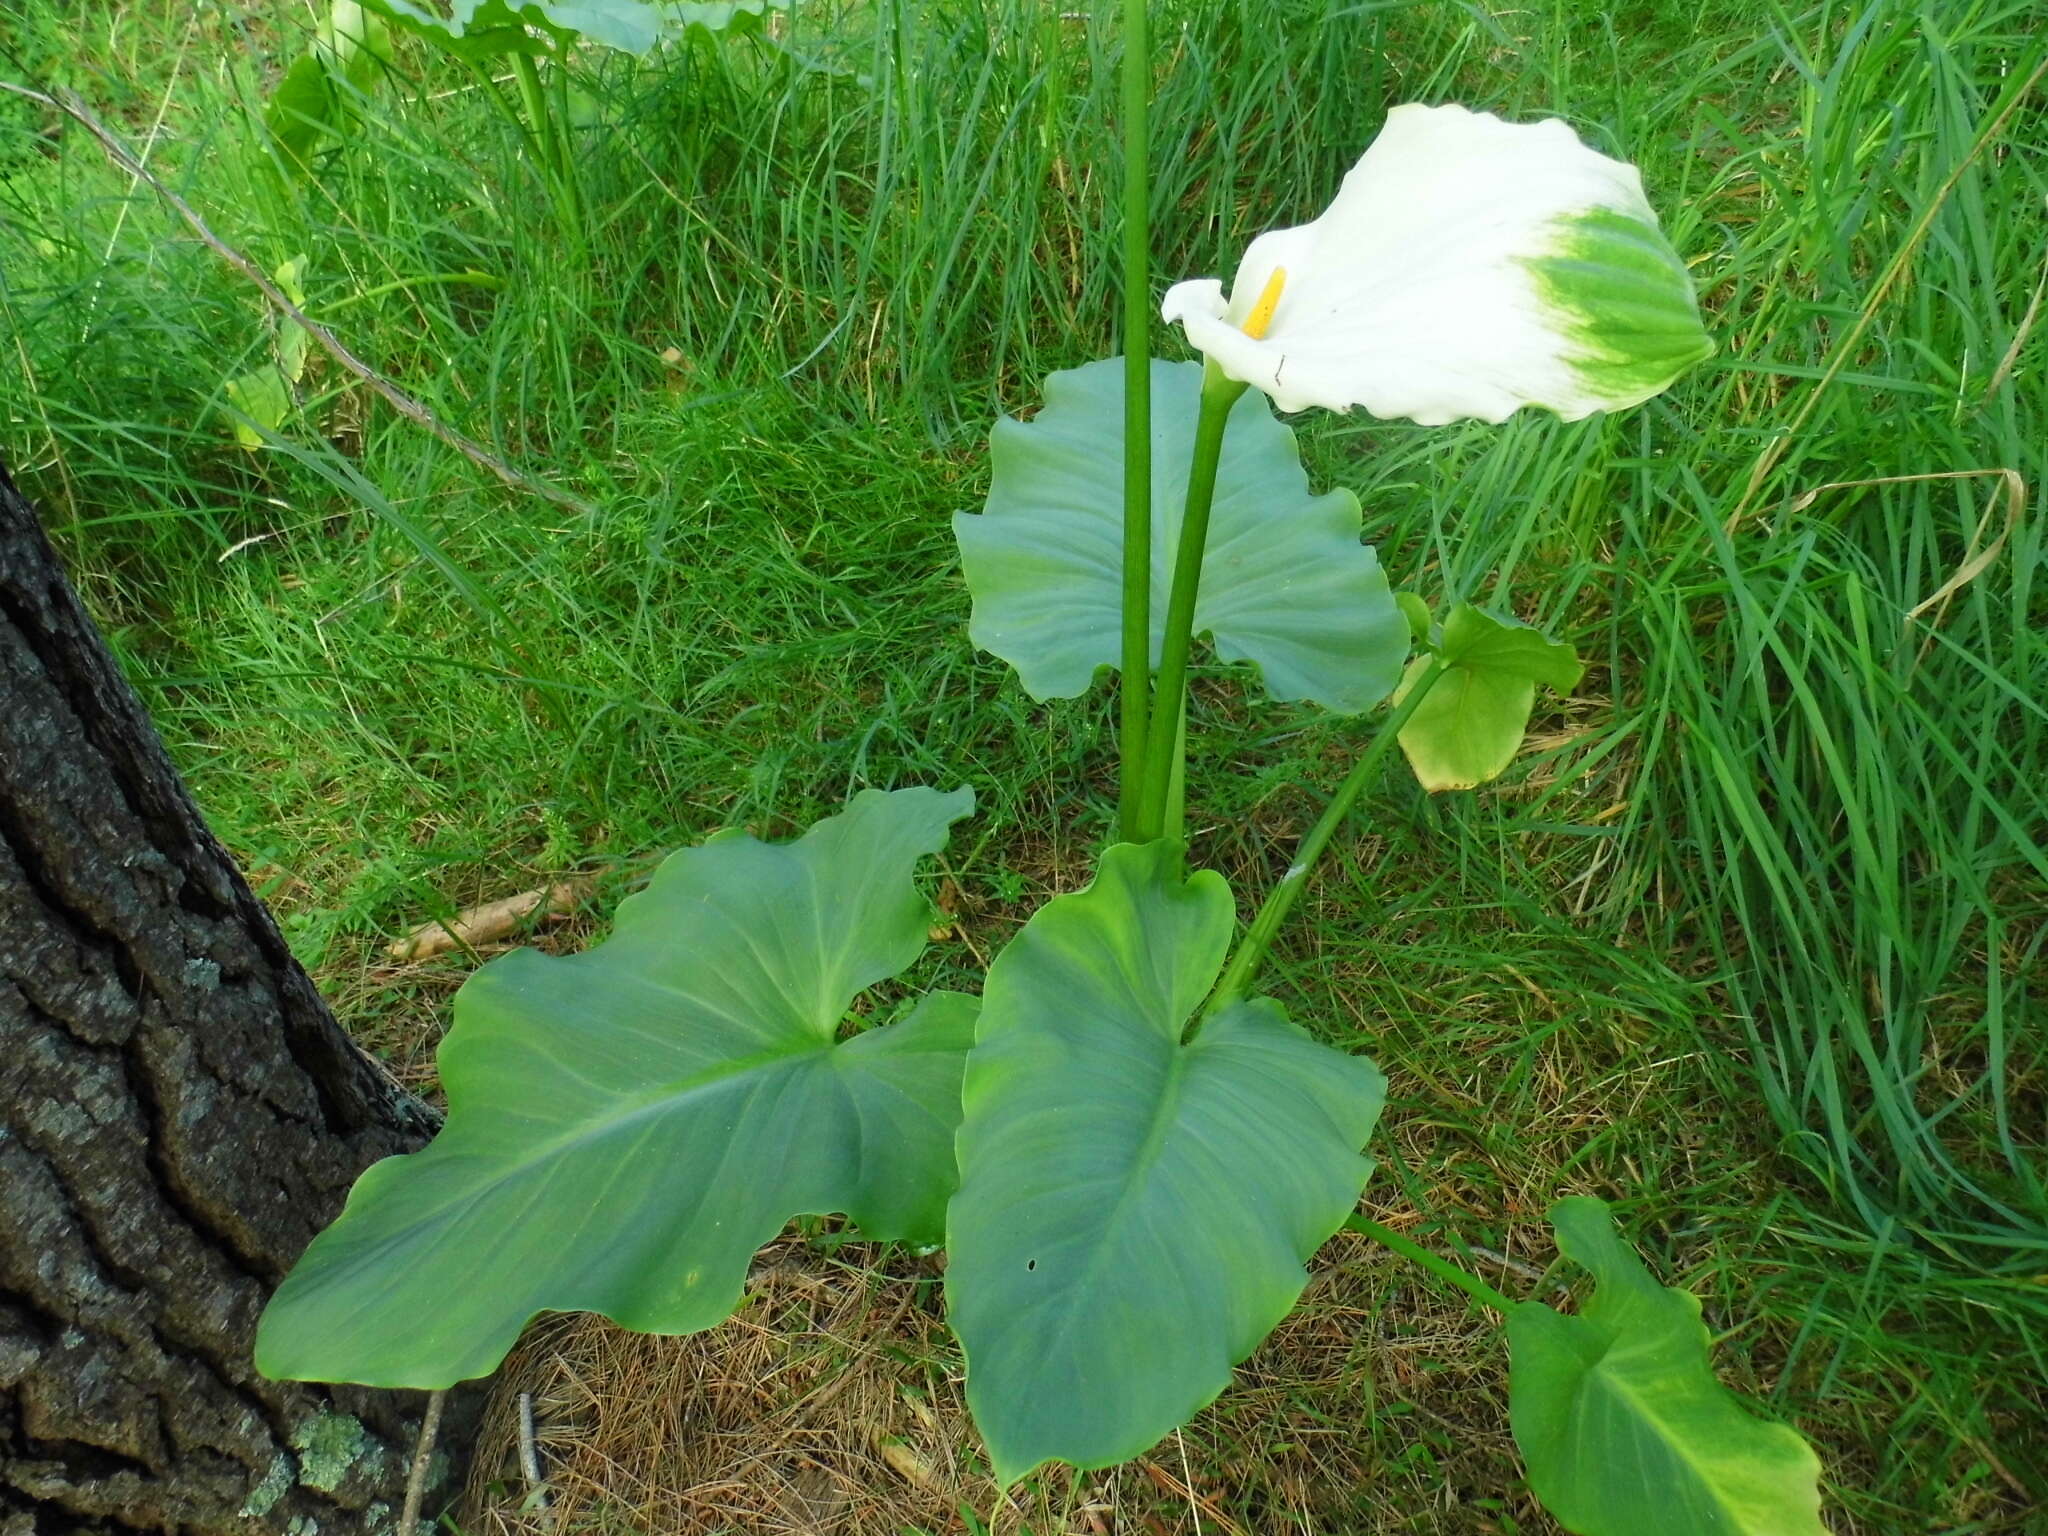 Image of calla lily